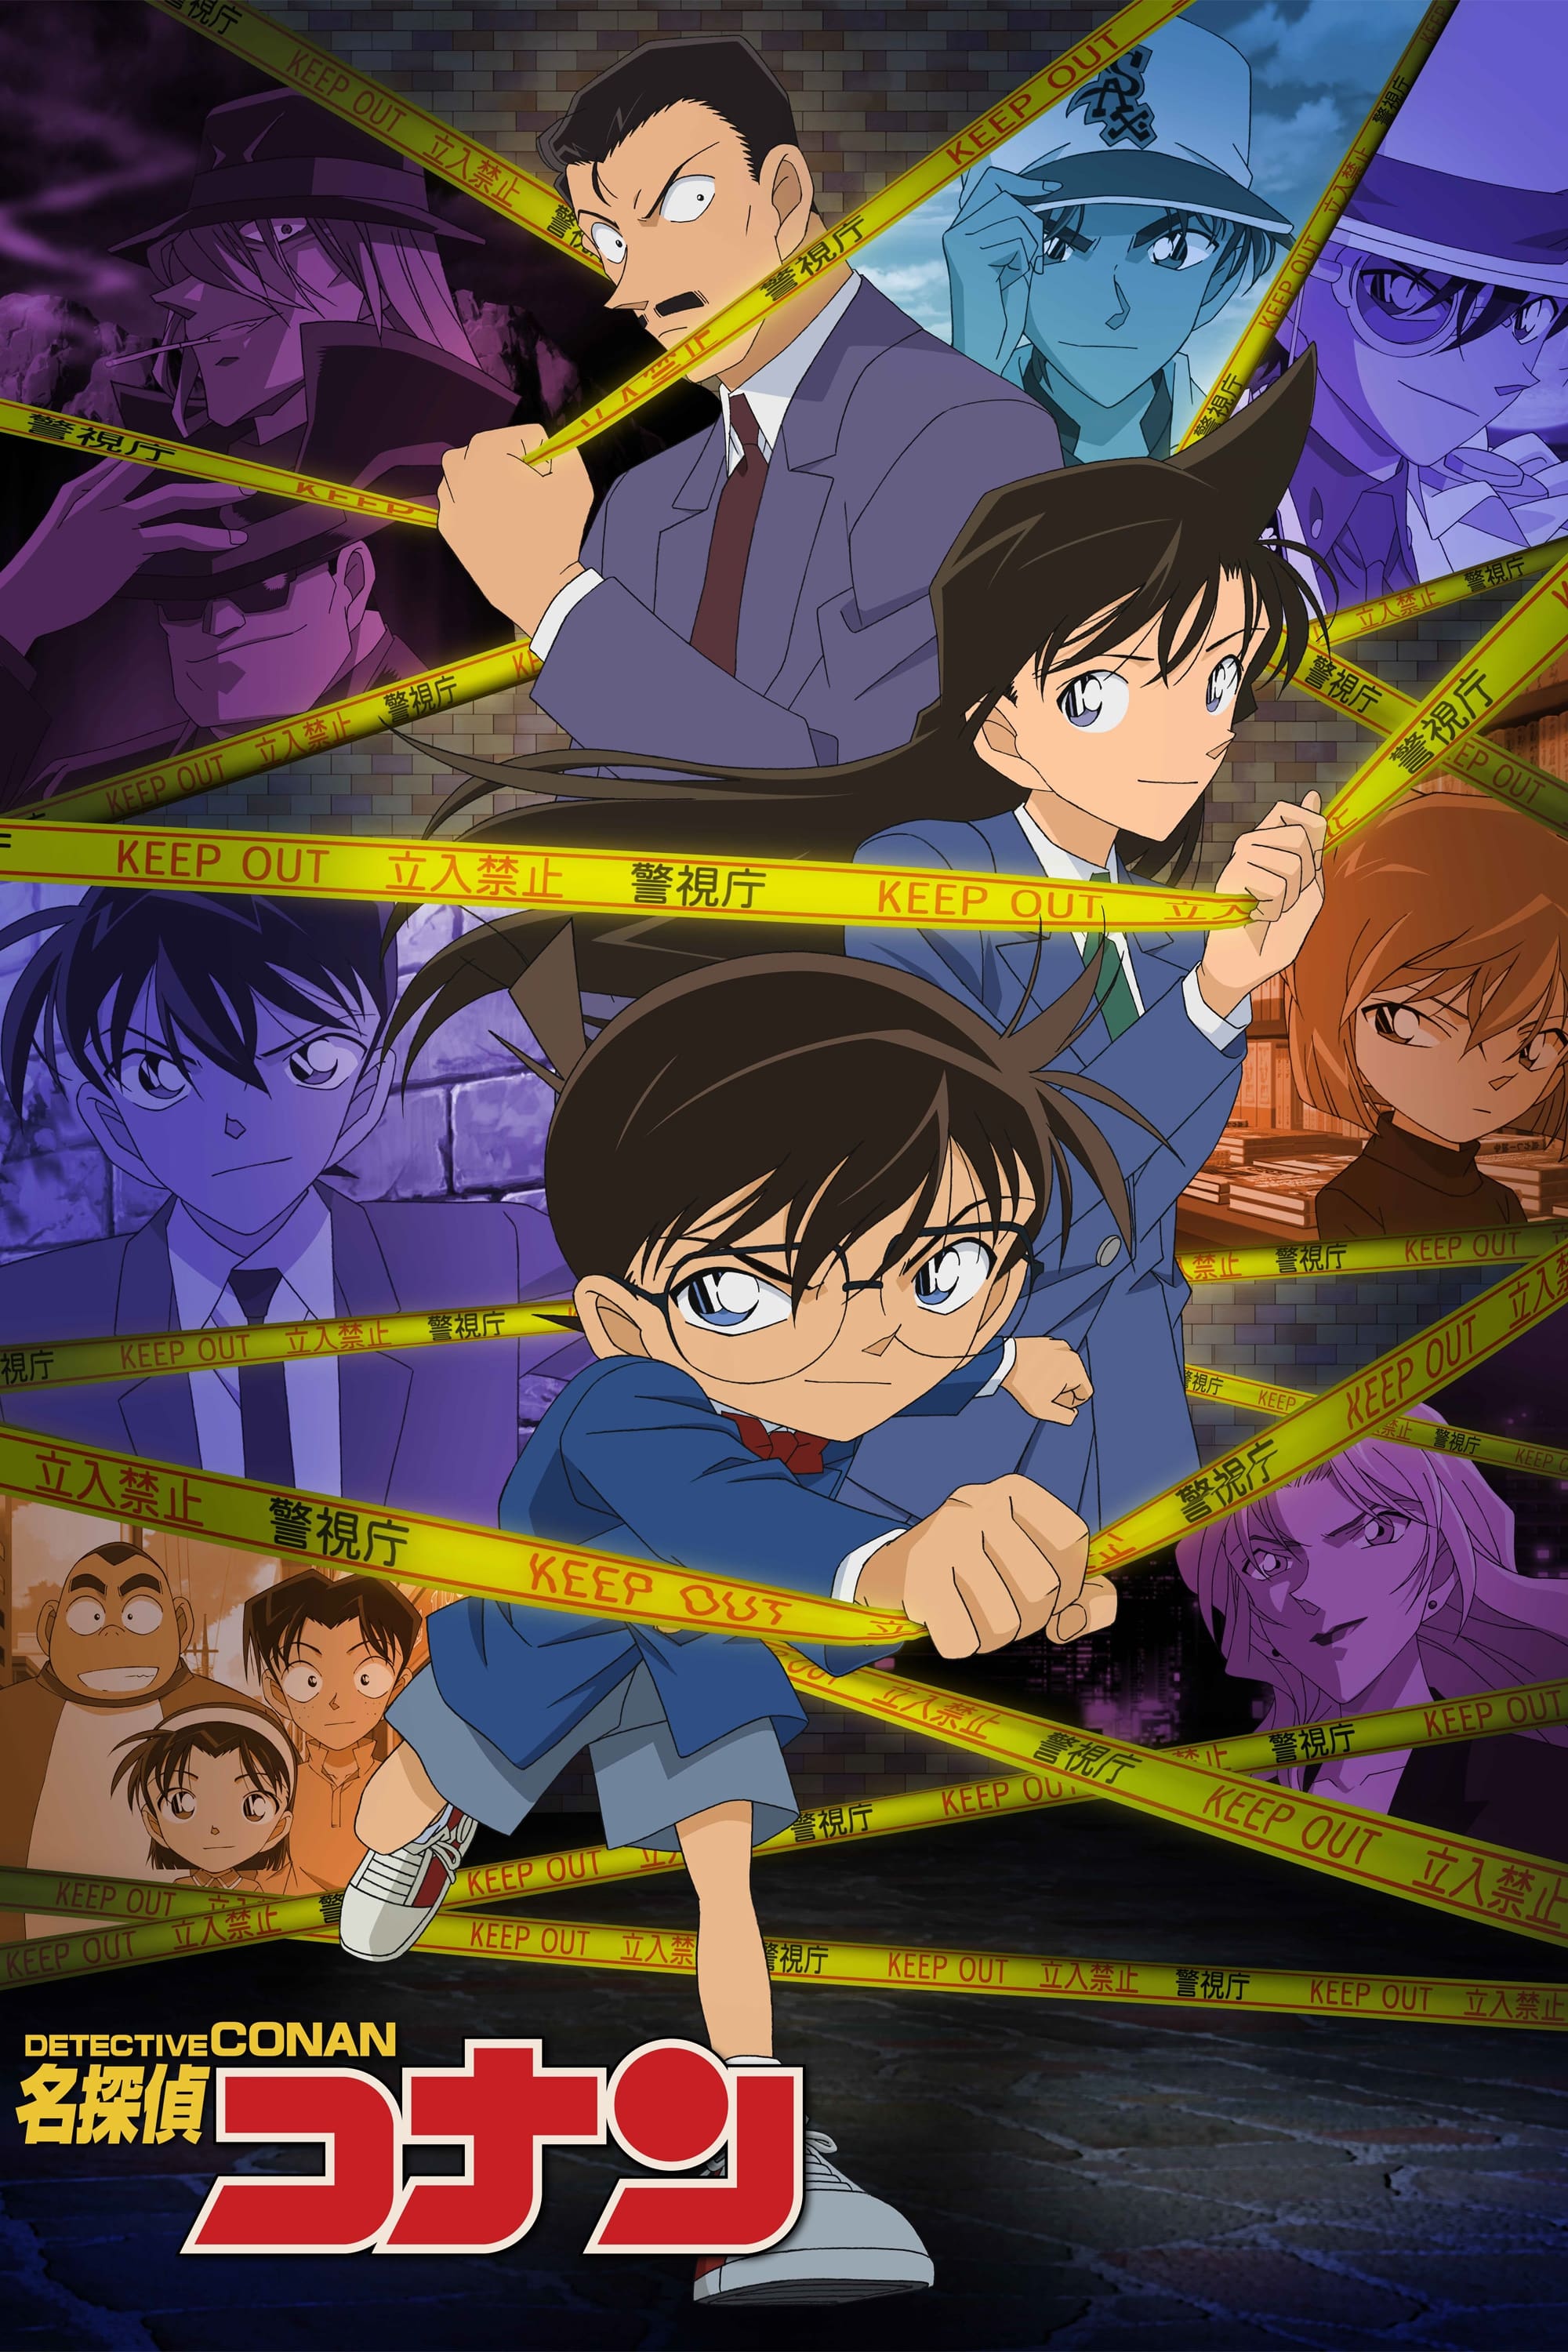 Thám Tử Lừng Danh Conan (Detective Conan) [1996]